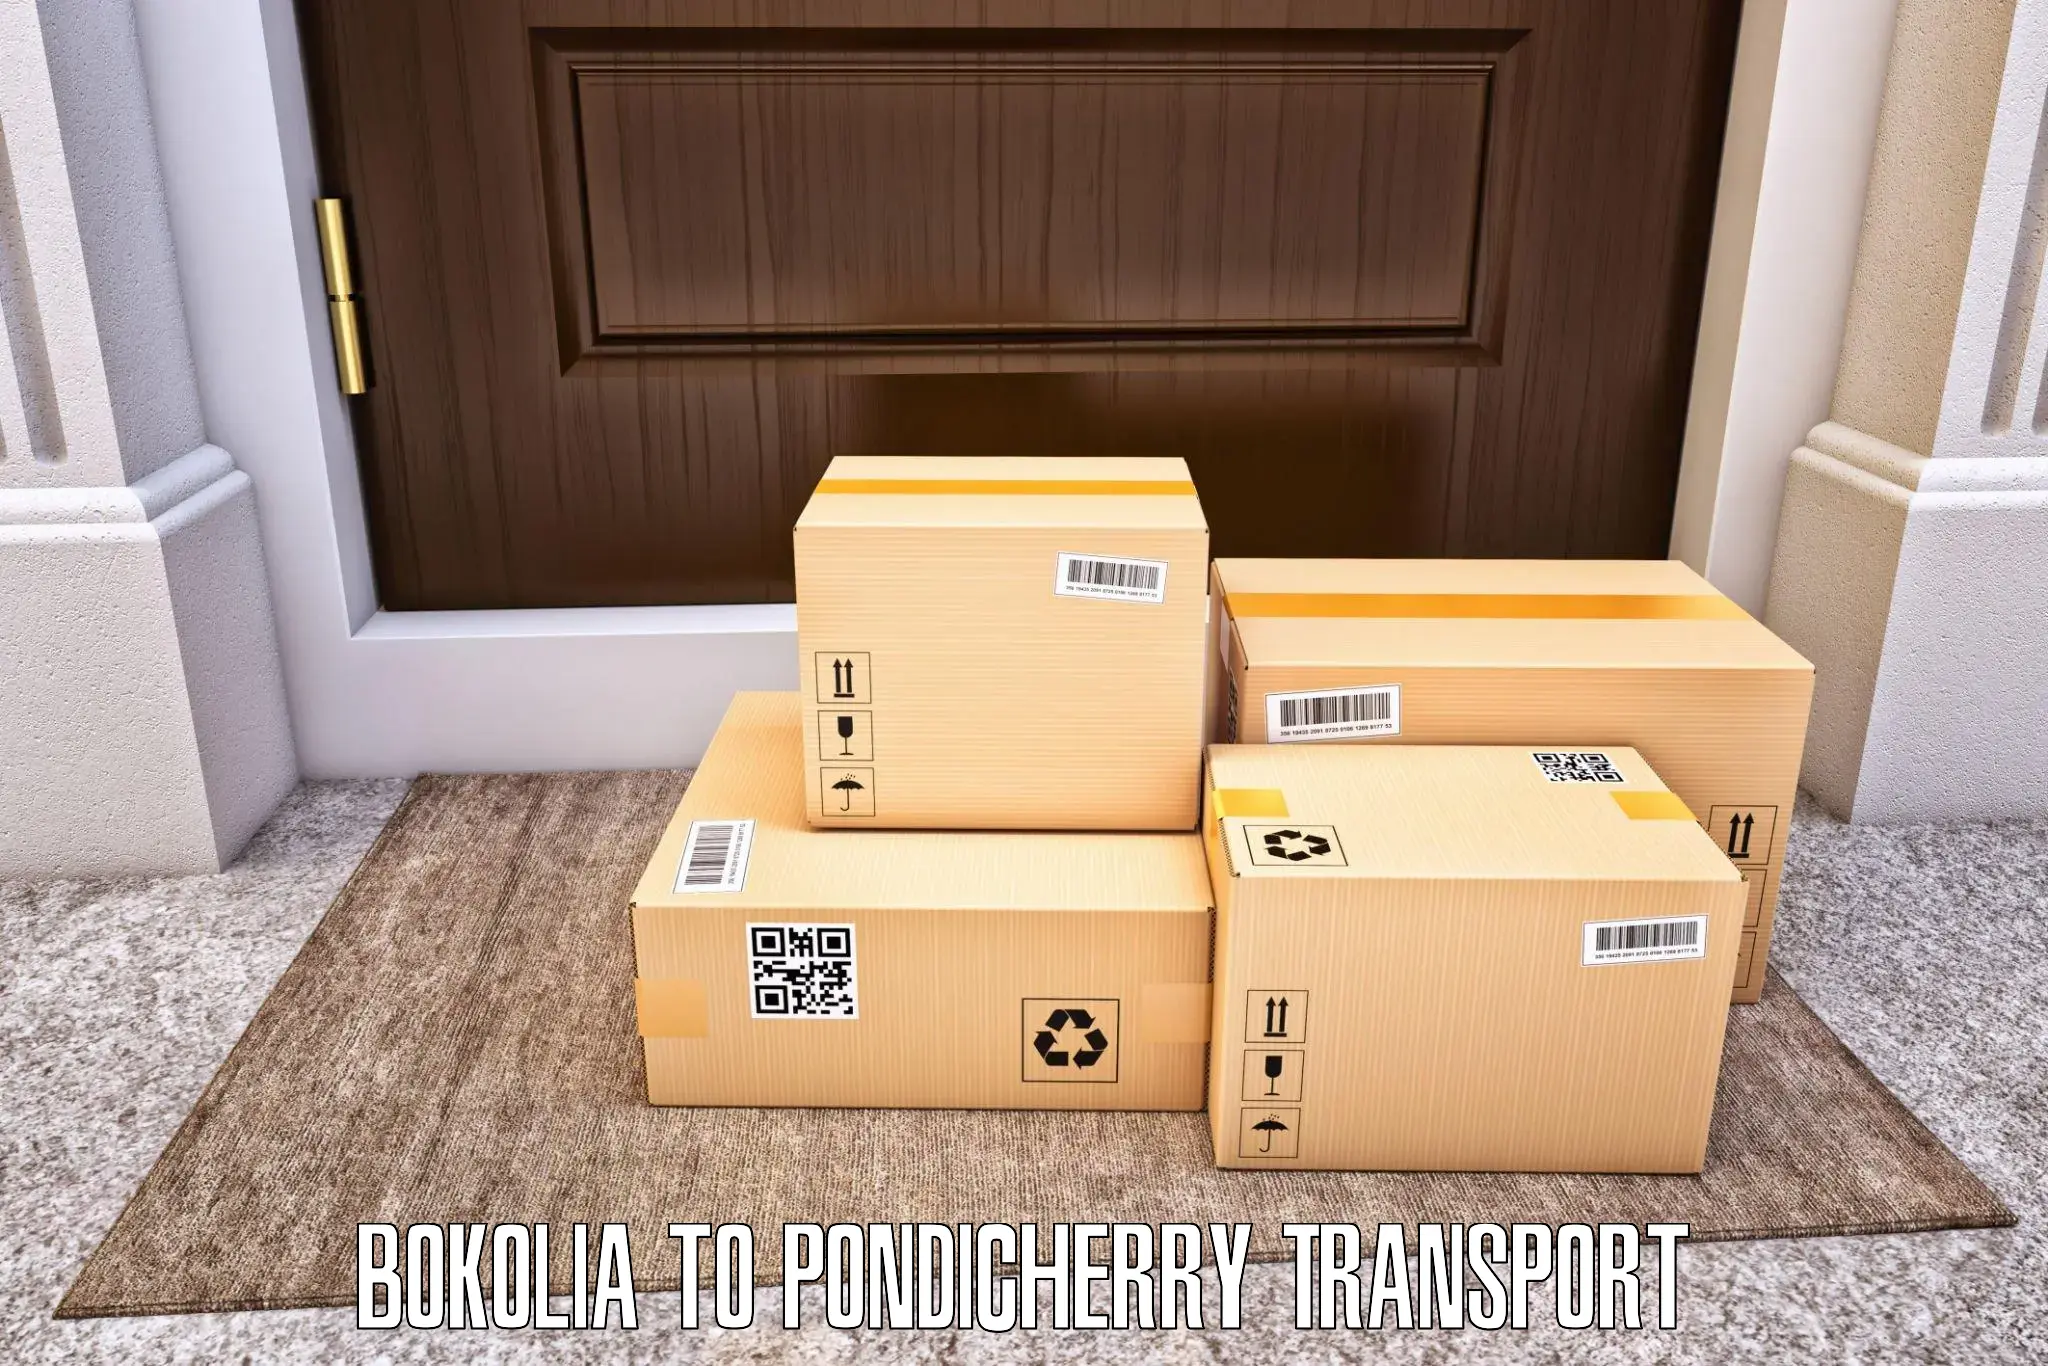 Commercial transport service Bokolia to Pondicherry